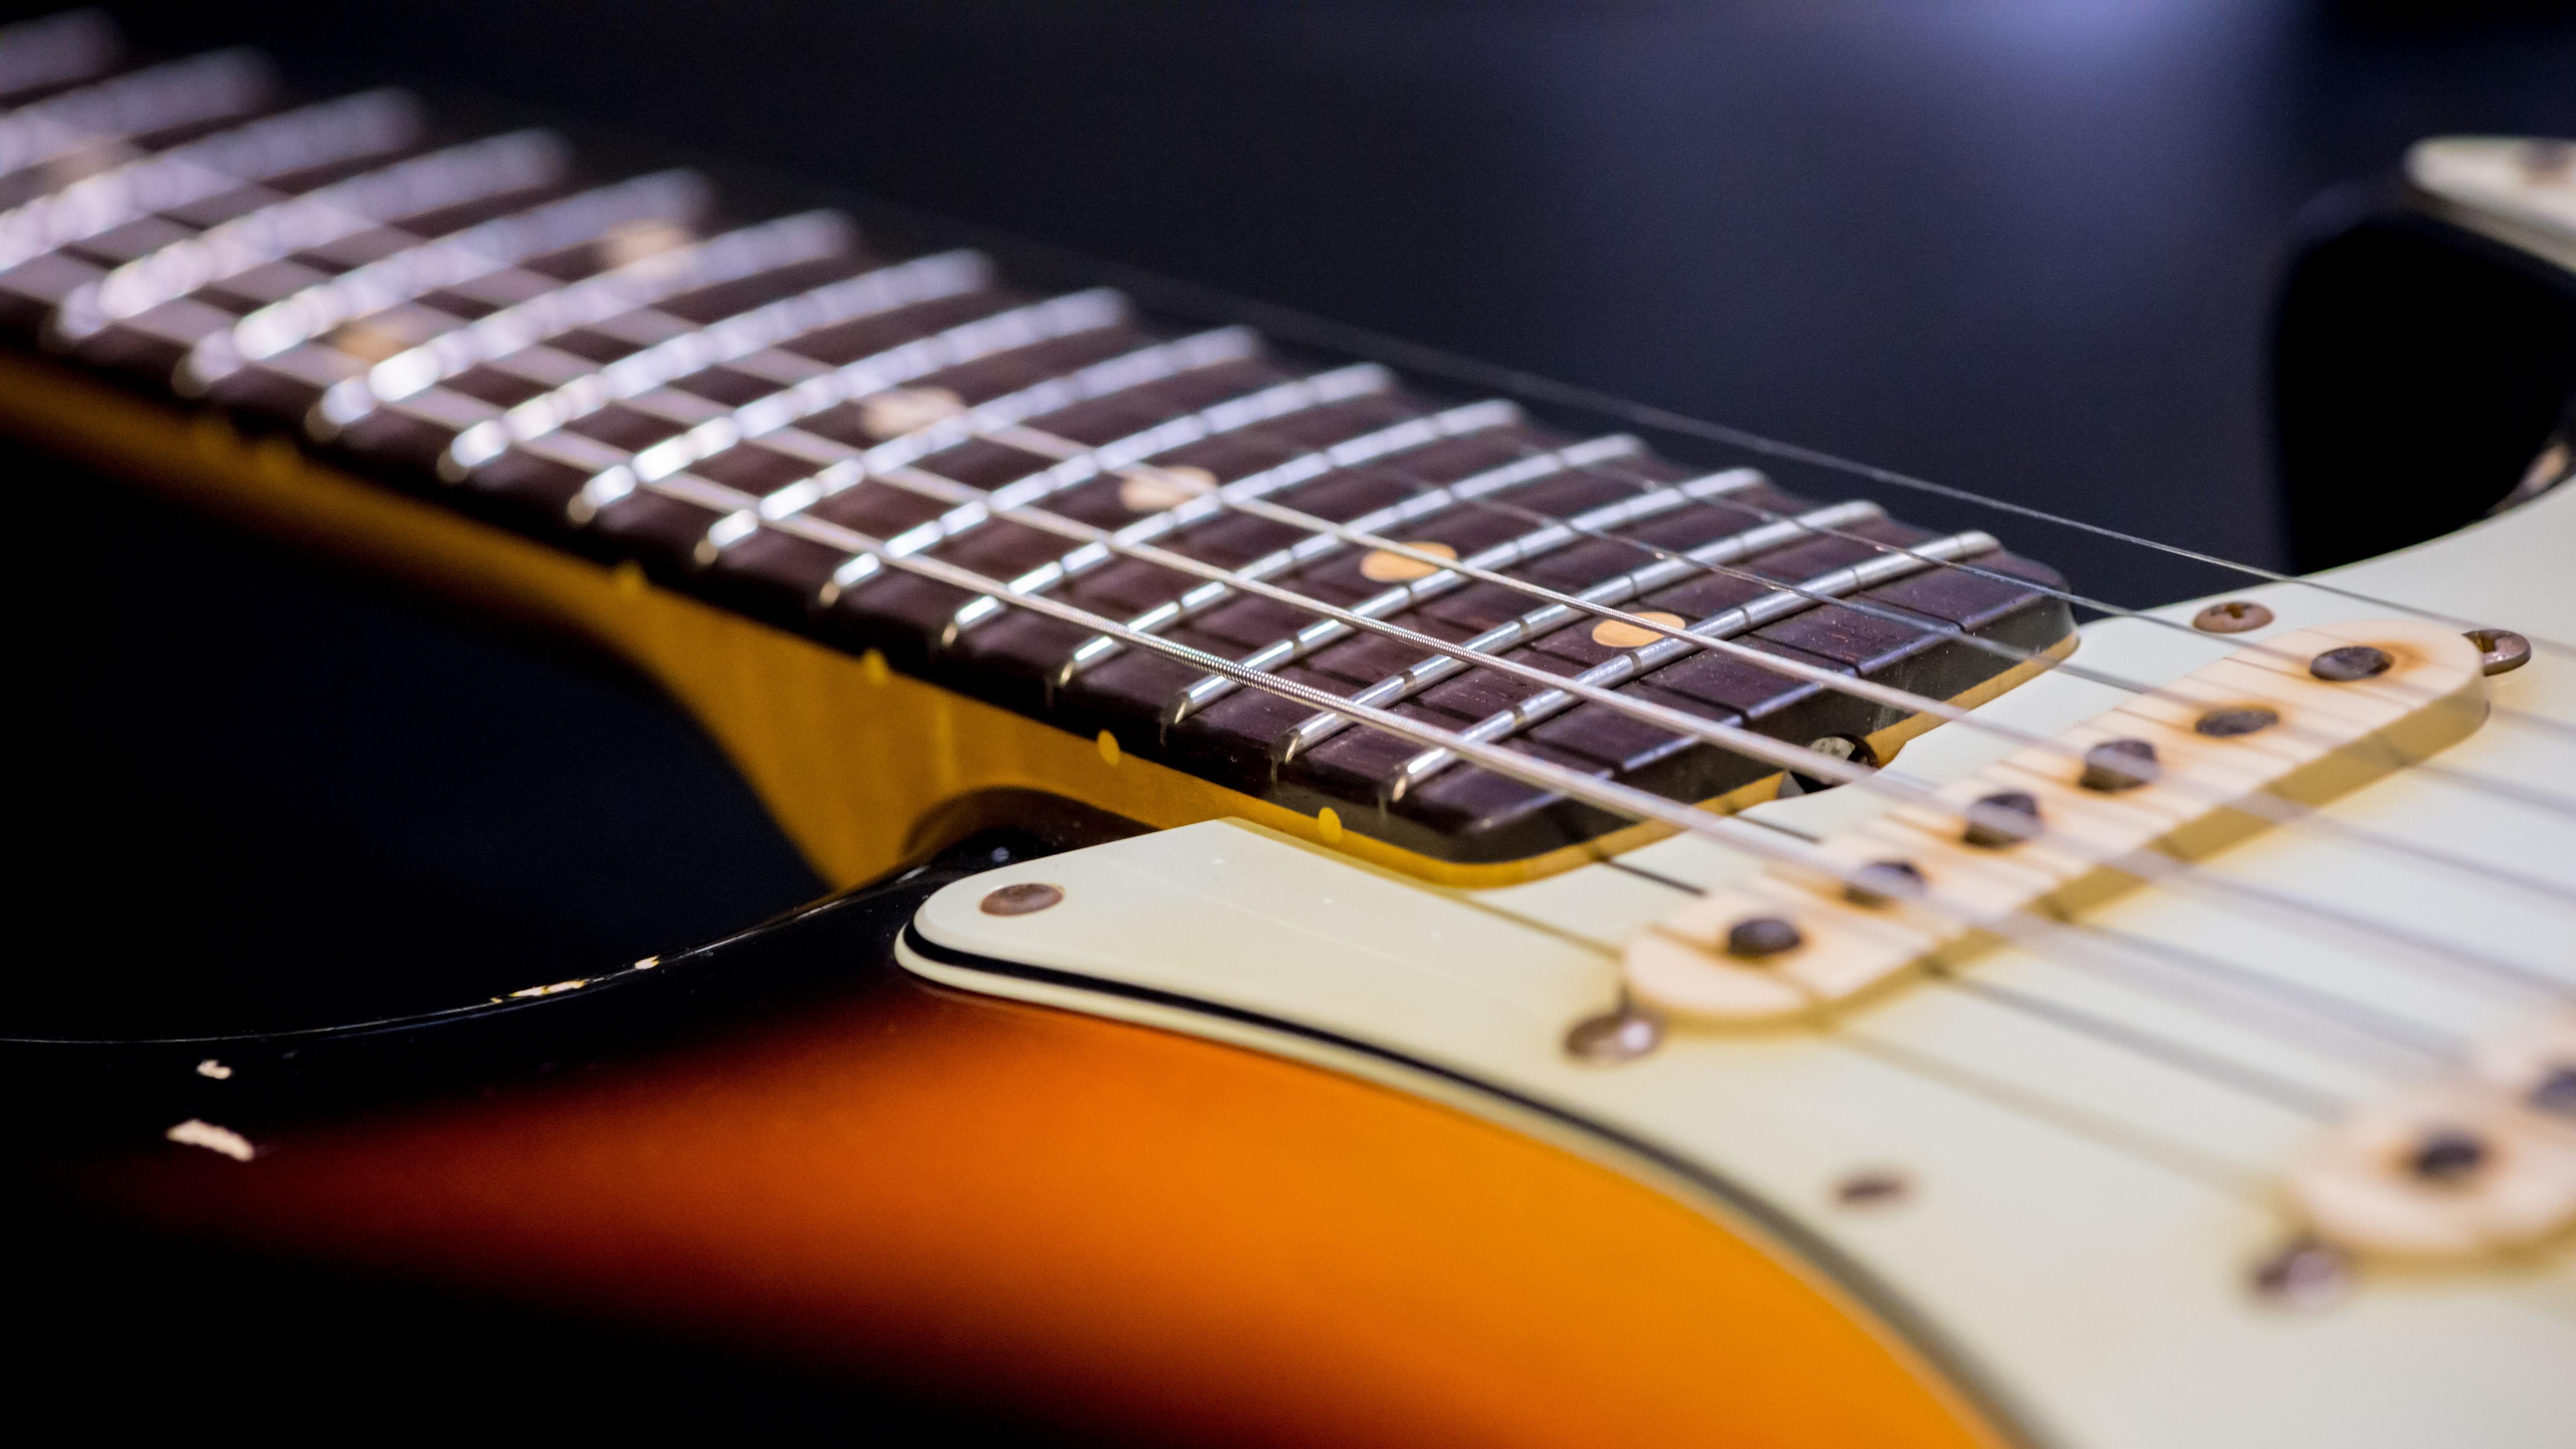 Fender Stratocaster guitar wallpaper - backiee